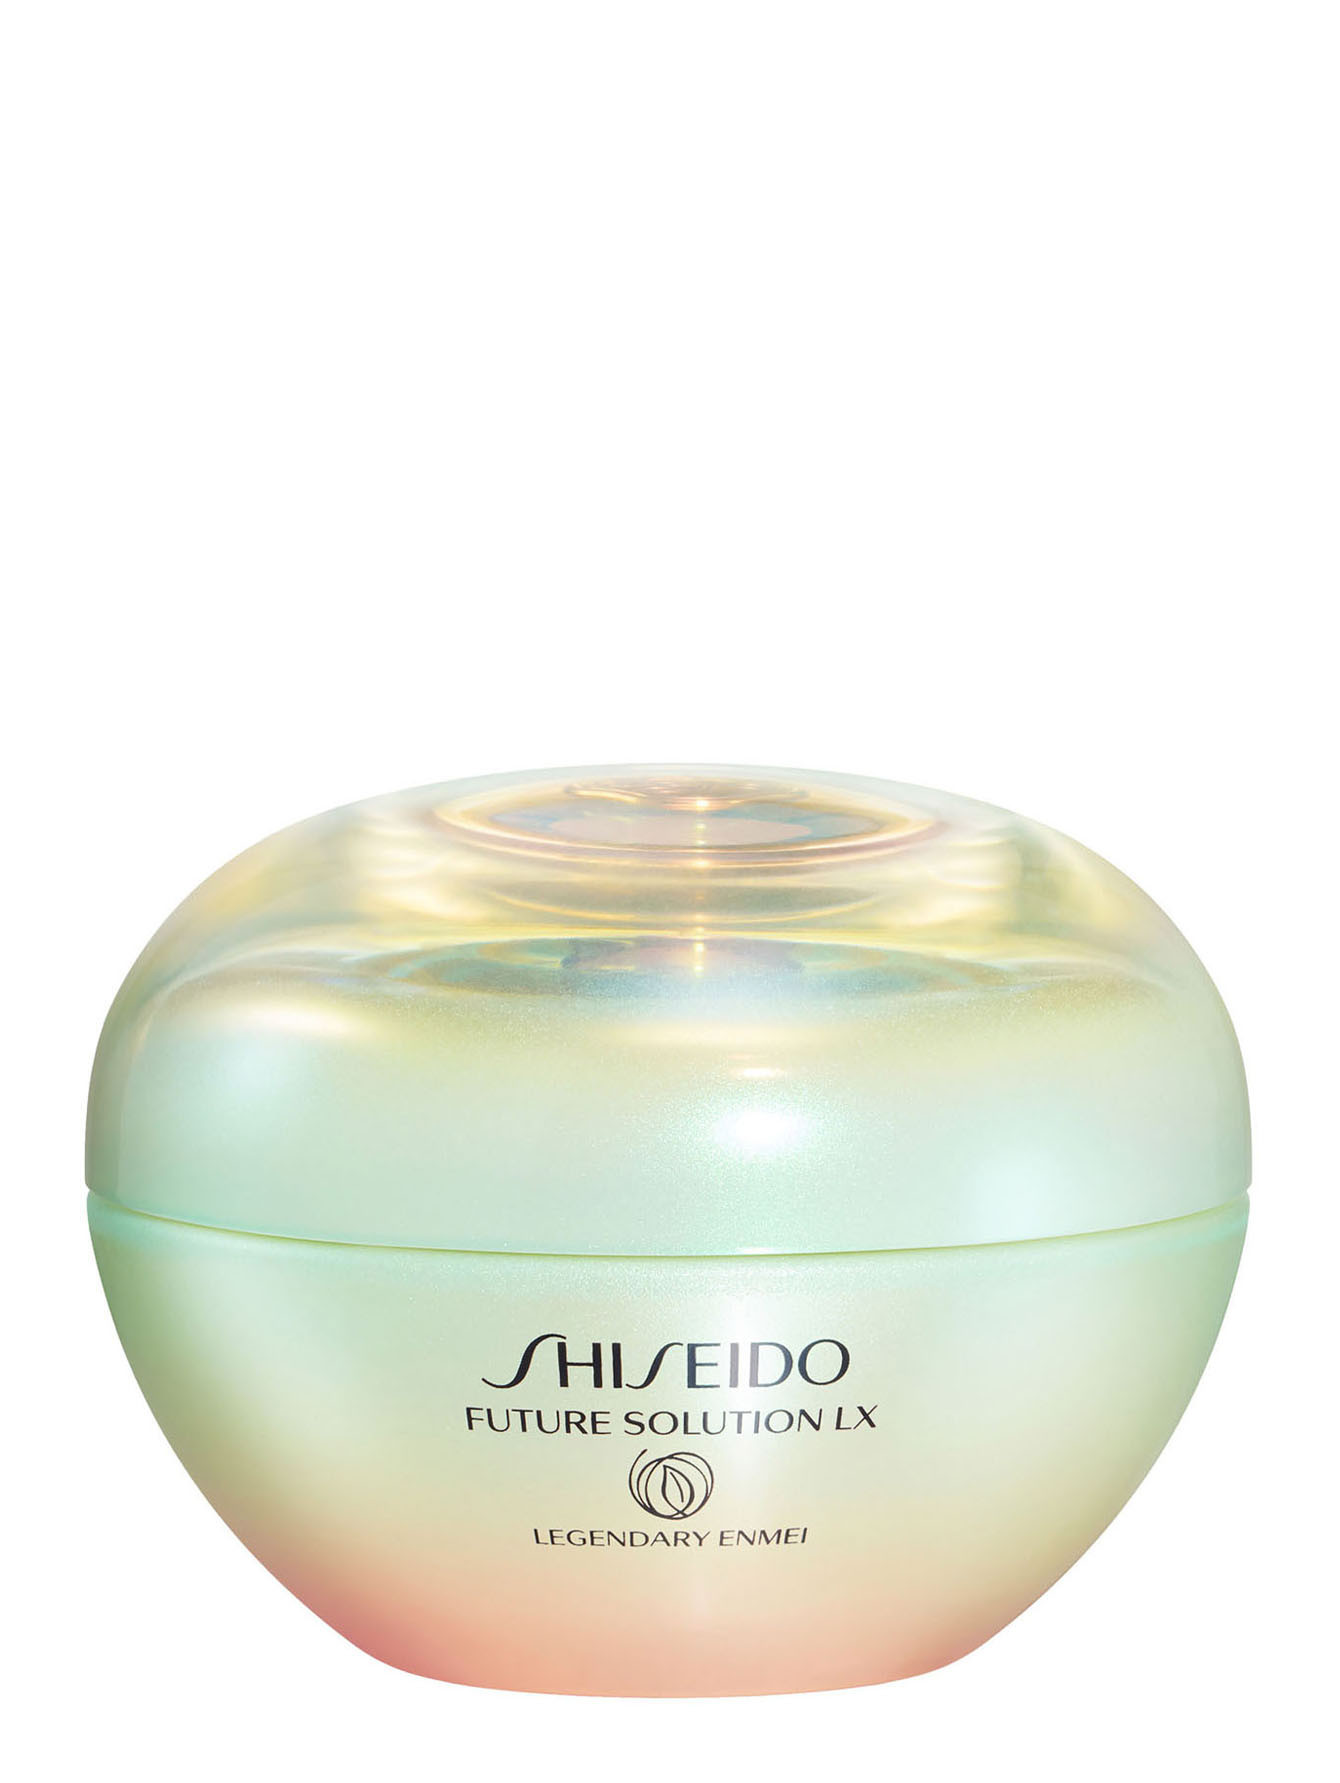 Shiseido solution lx. Shiseido Future solution LX. Крем Shiseido Future solution. Shiseido cыворотка для здорового сияния кожи Legendary Enmei Future solution LX. Future solution Legendary Cream.